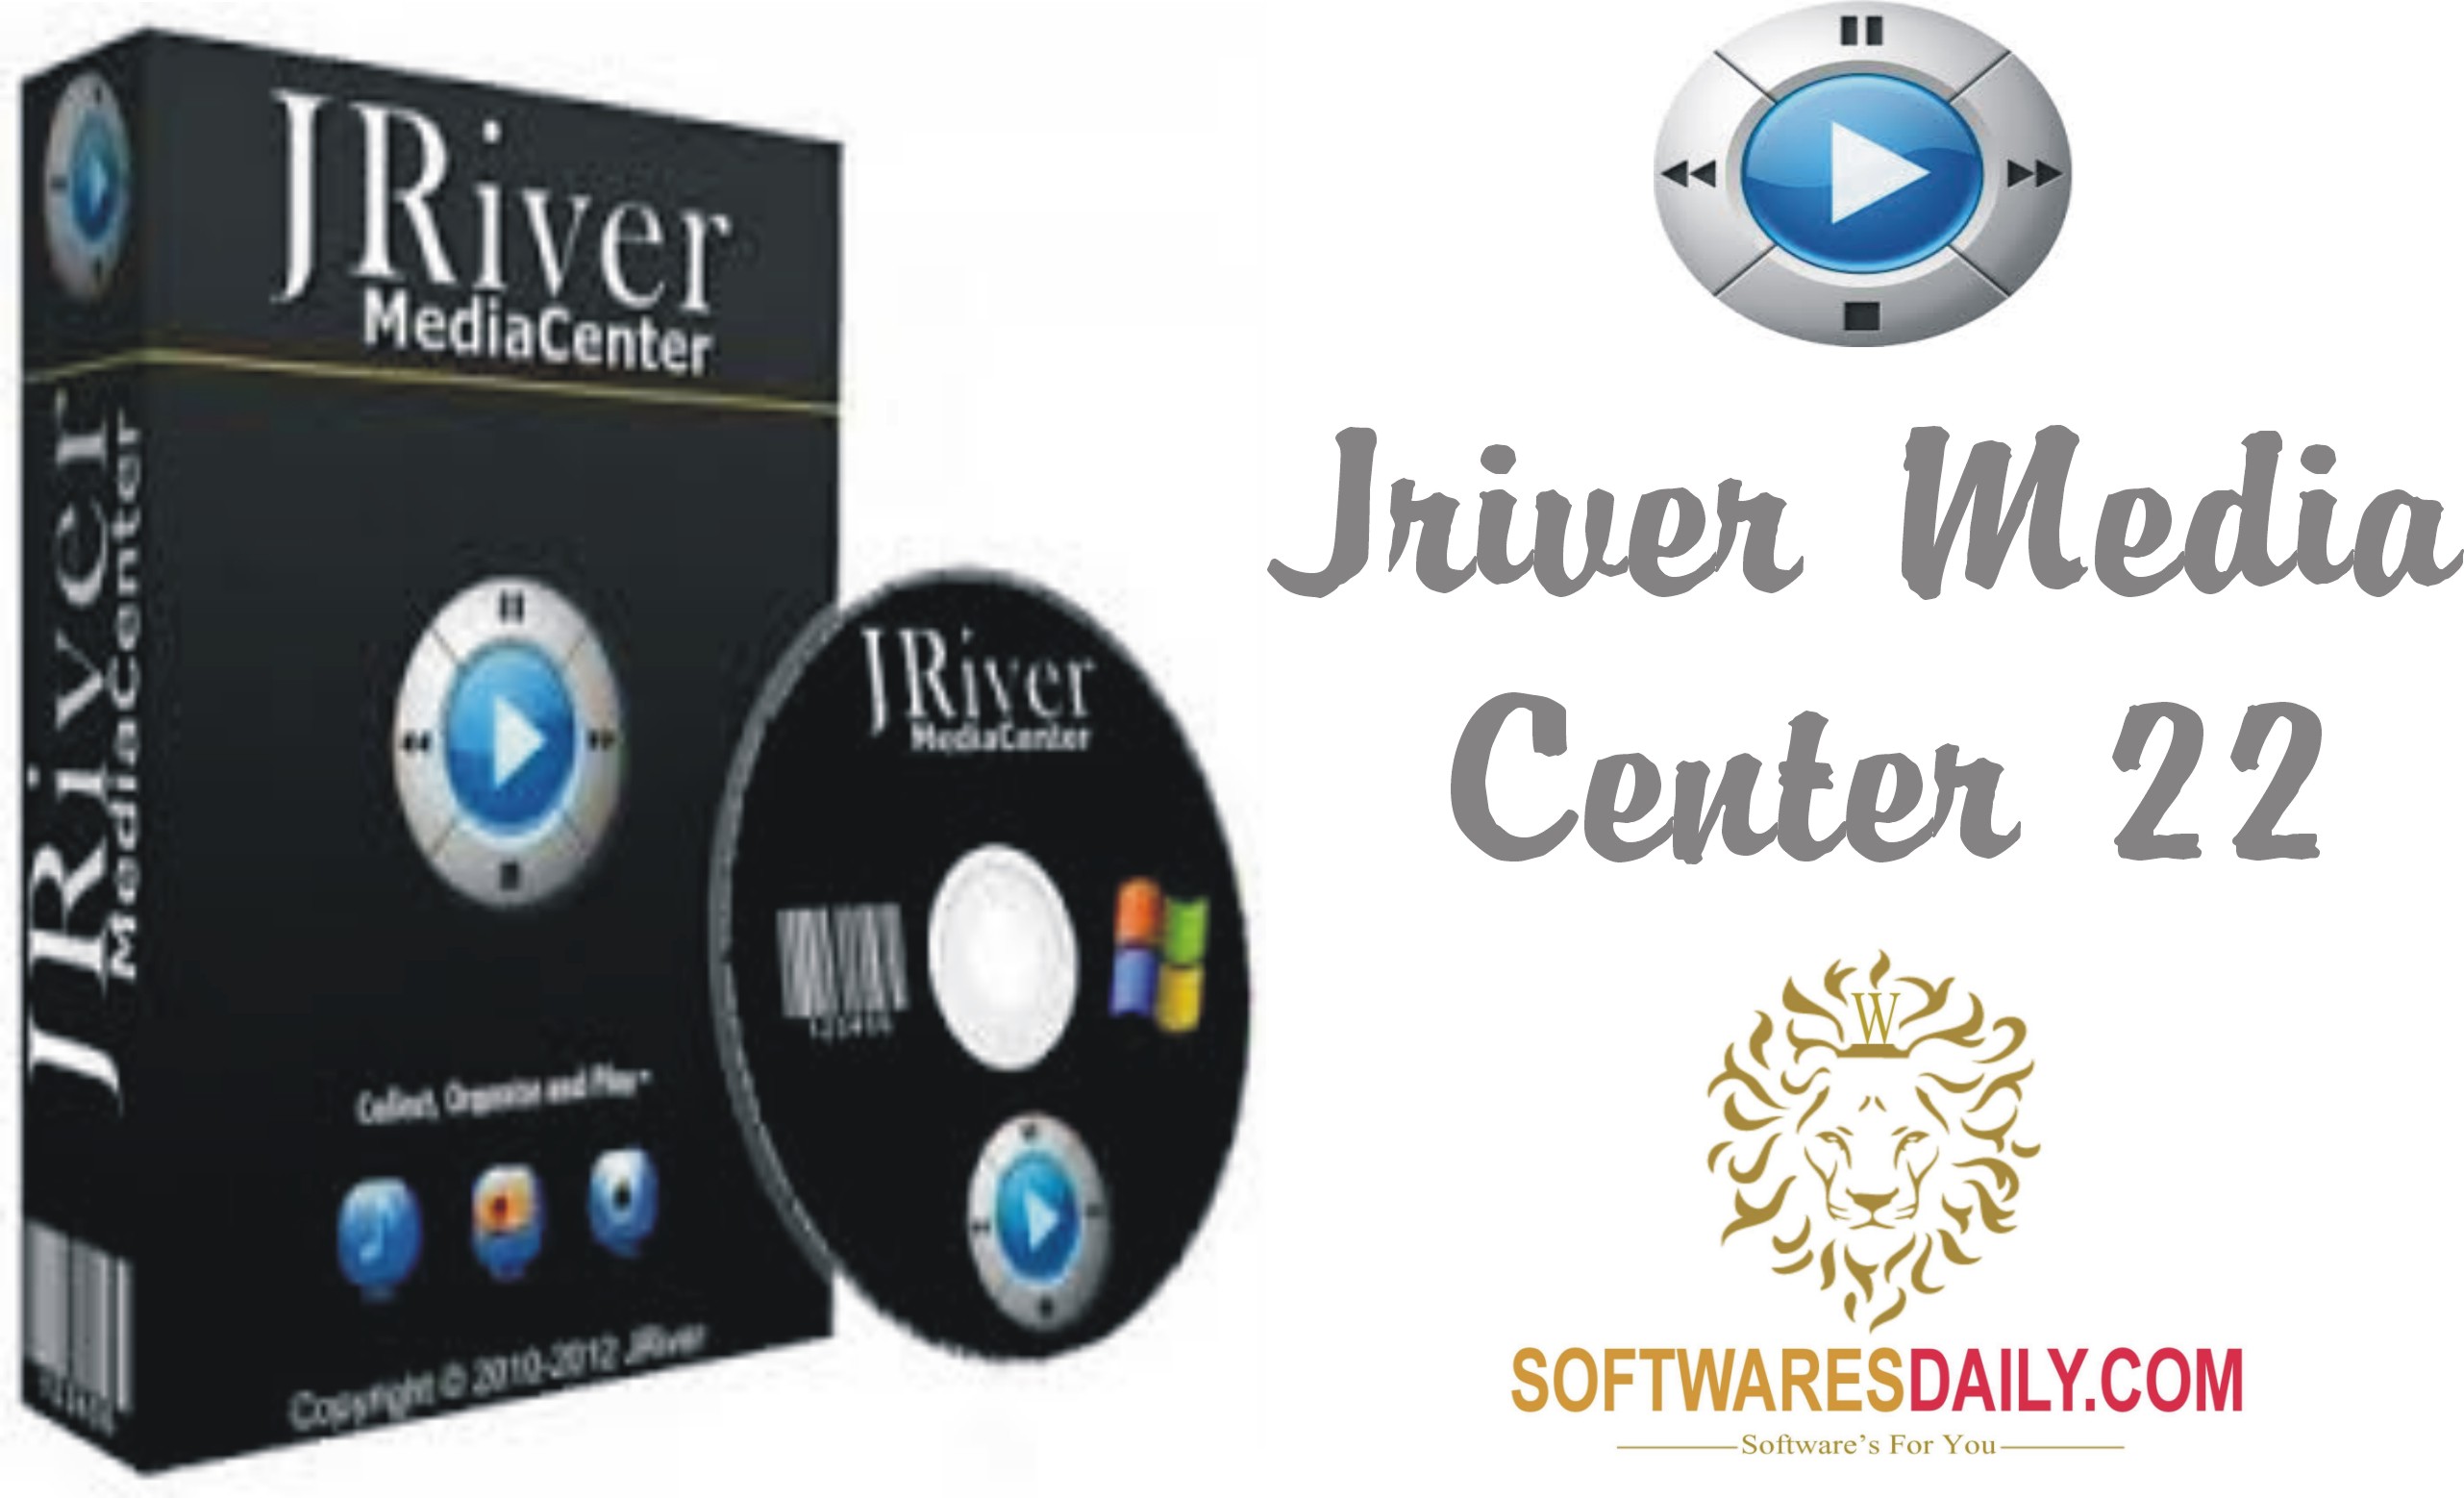 JRiver Media Center 31.0.23 instal the new for mac